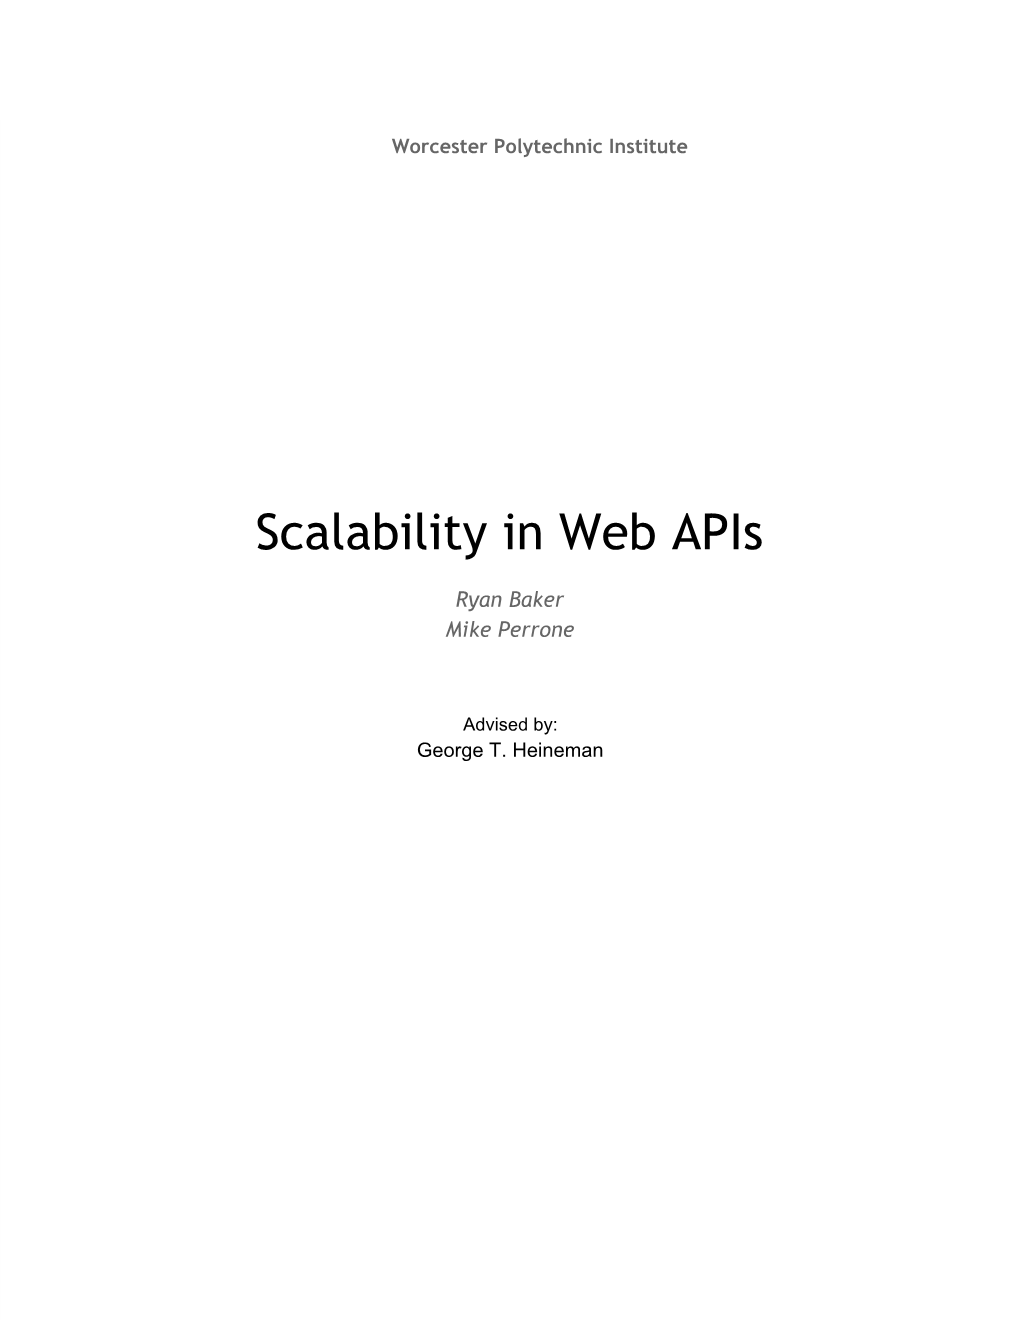 Scalability in Web Apis